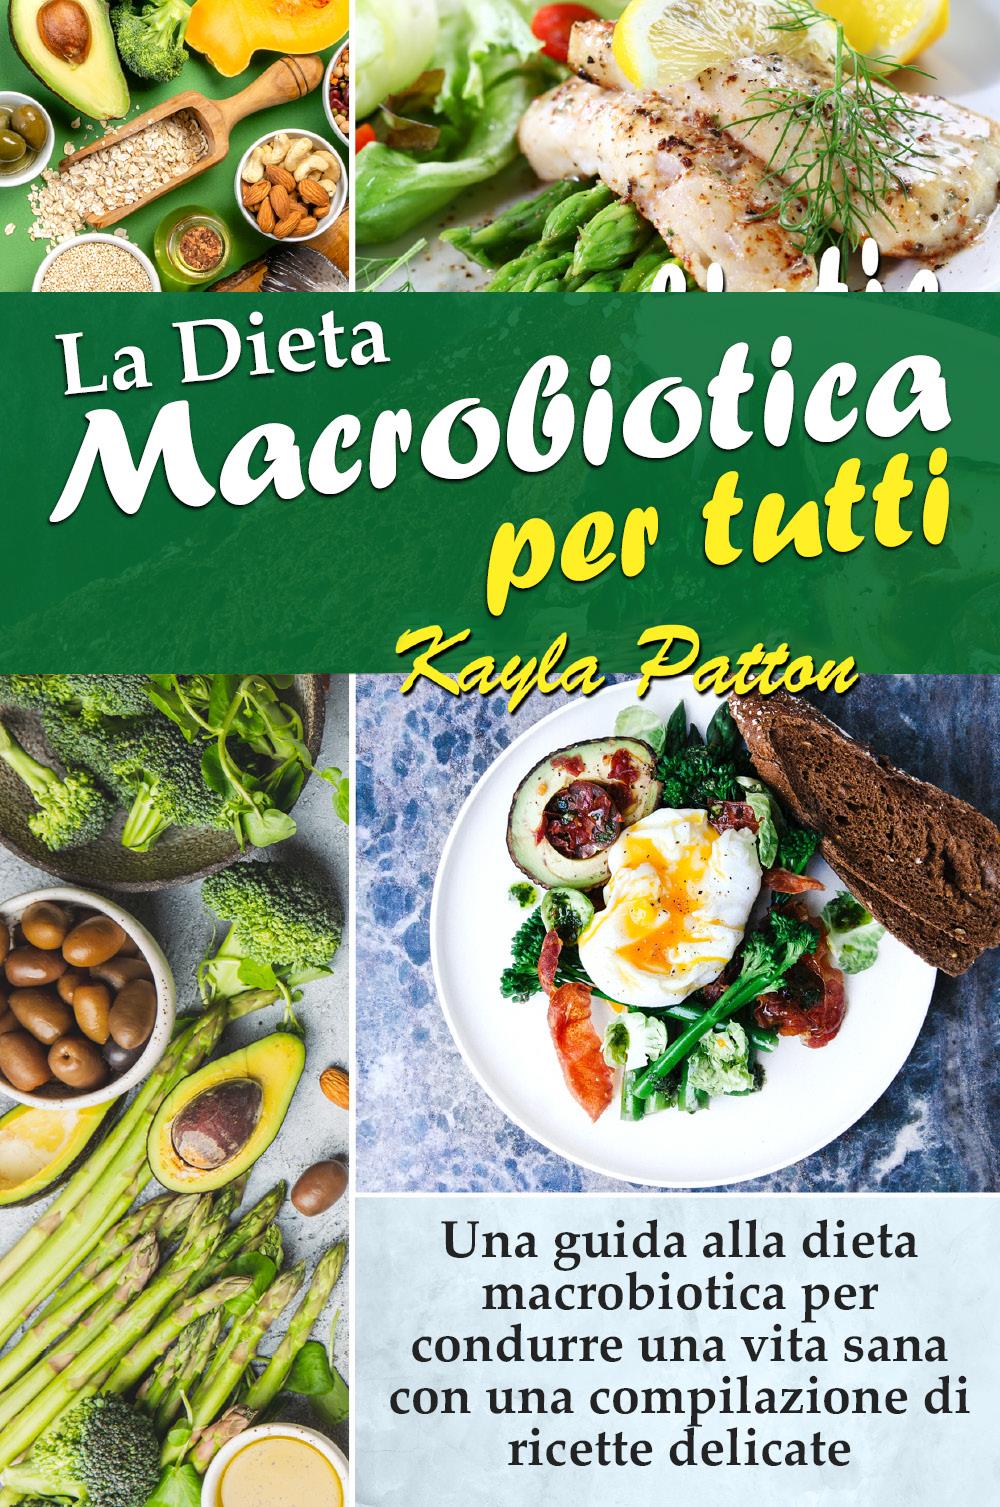 La Dieta Macrobiotica per tutti